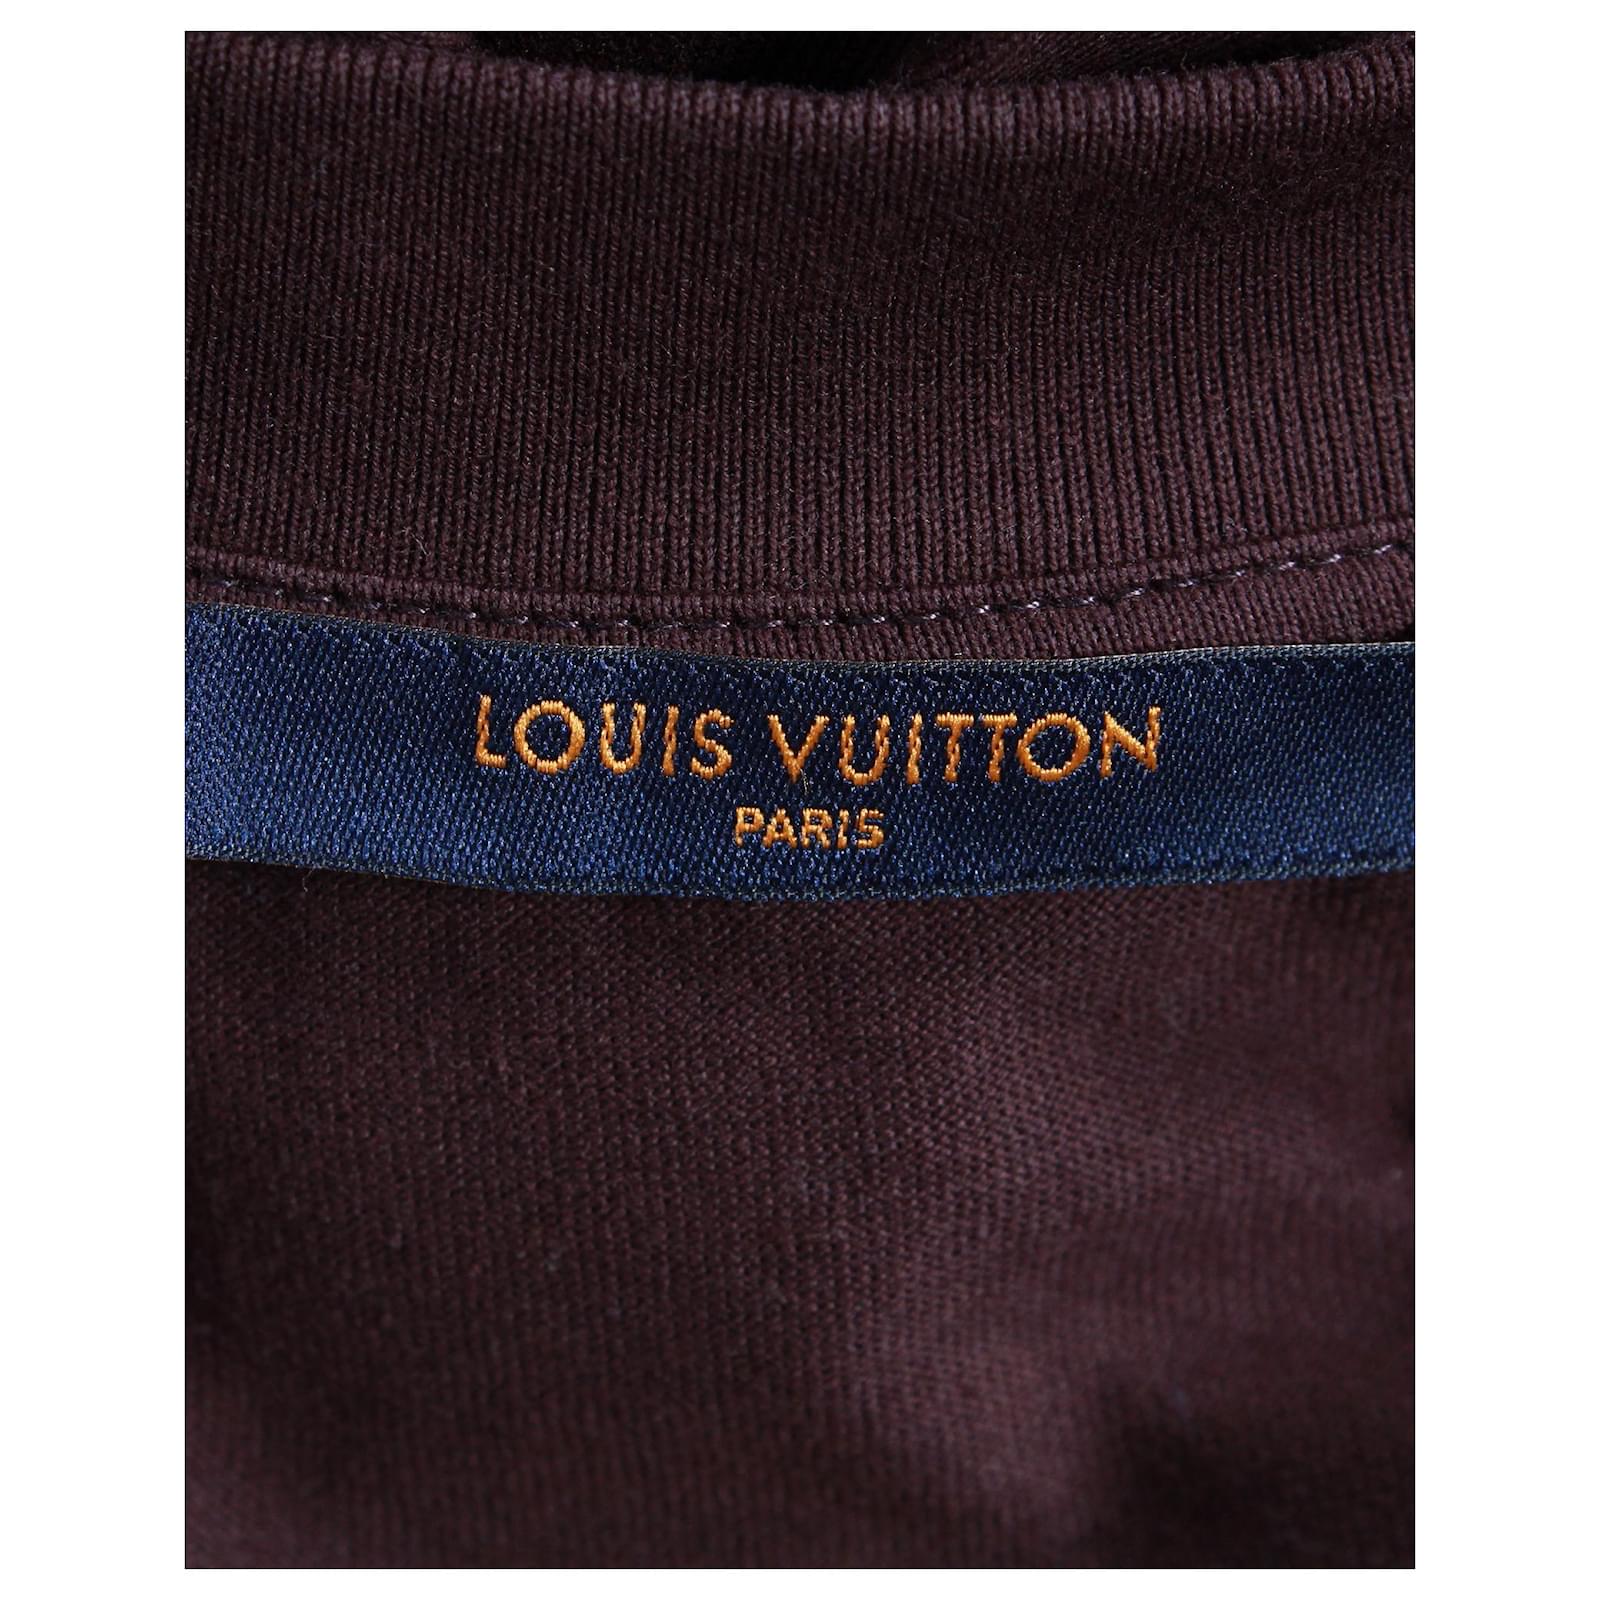 LOUIS VUITTON Monogram Gradient Logo Full Print Short Sleeve Blue